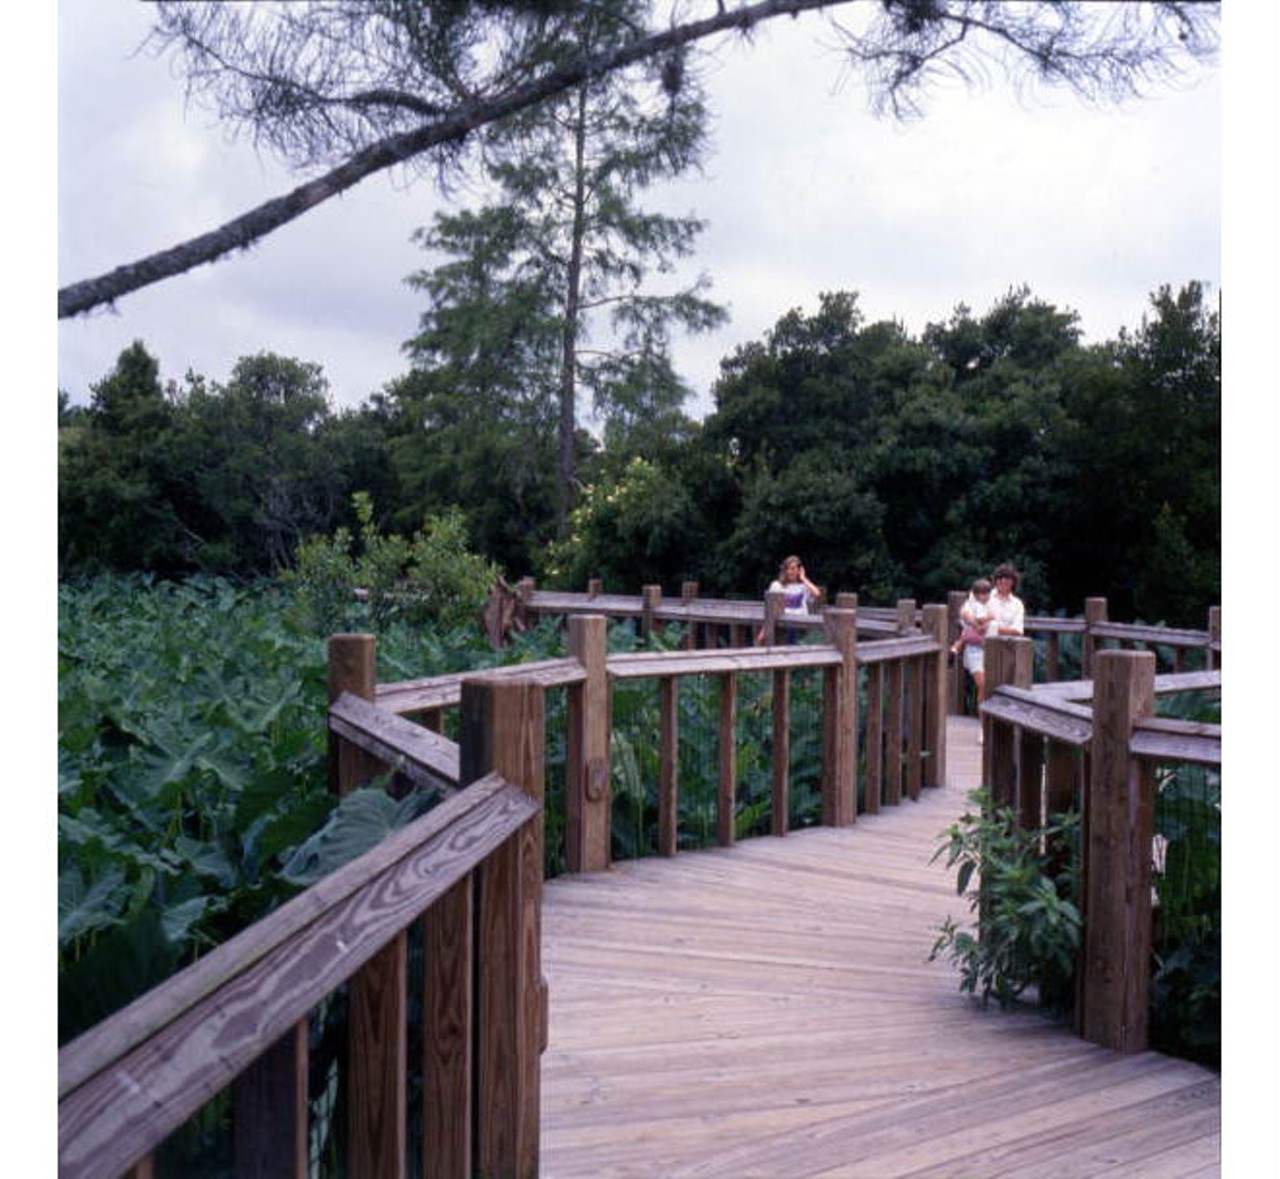 Visitors walking on footbridgeState Archives of Florida, Florida Memory